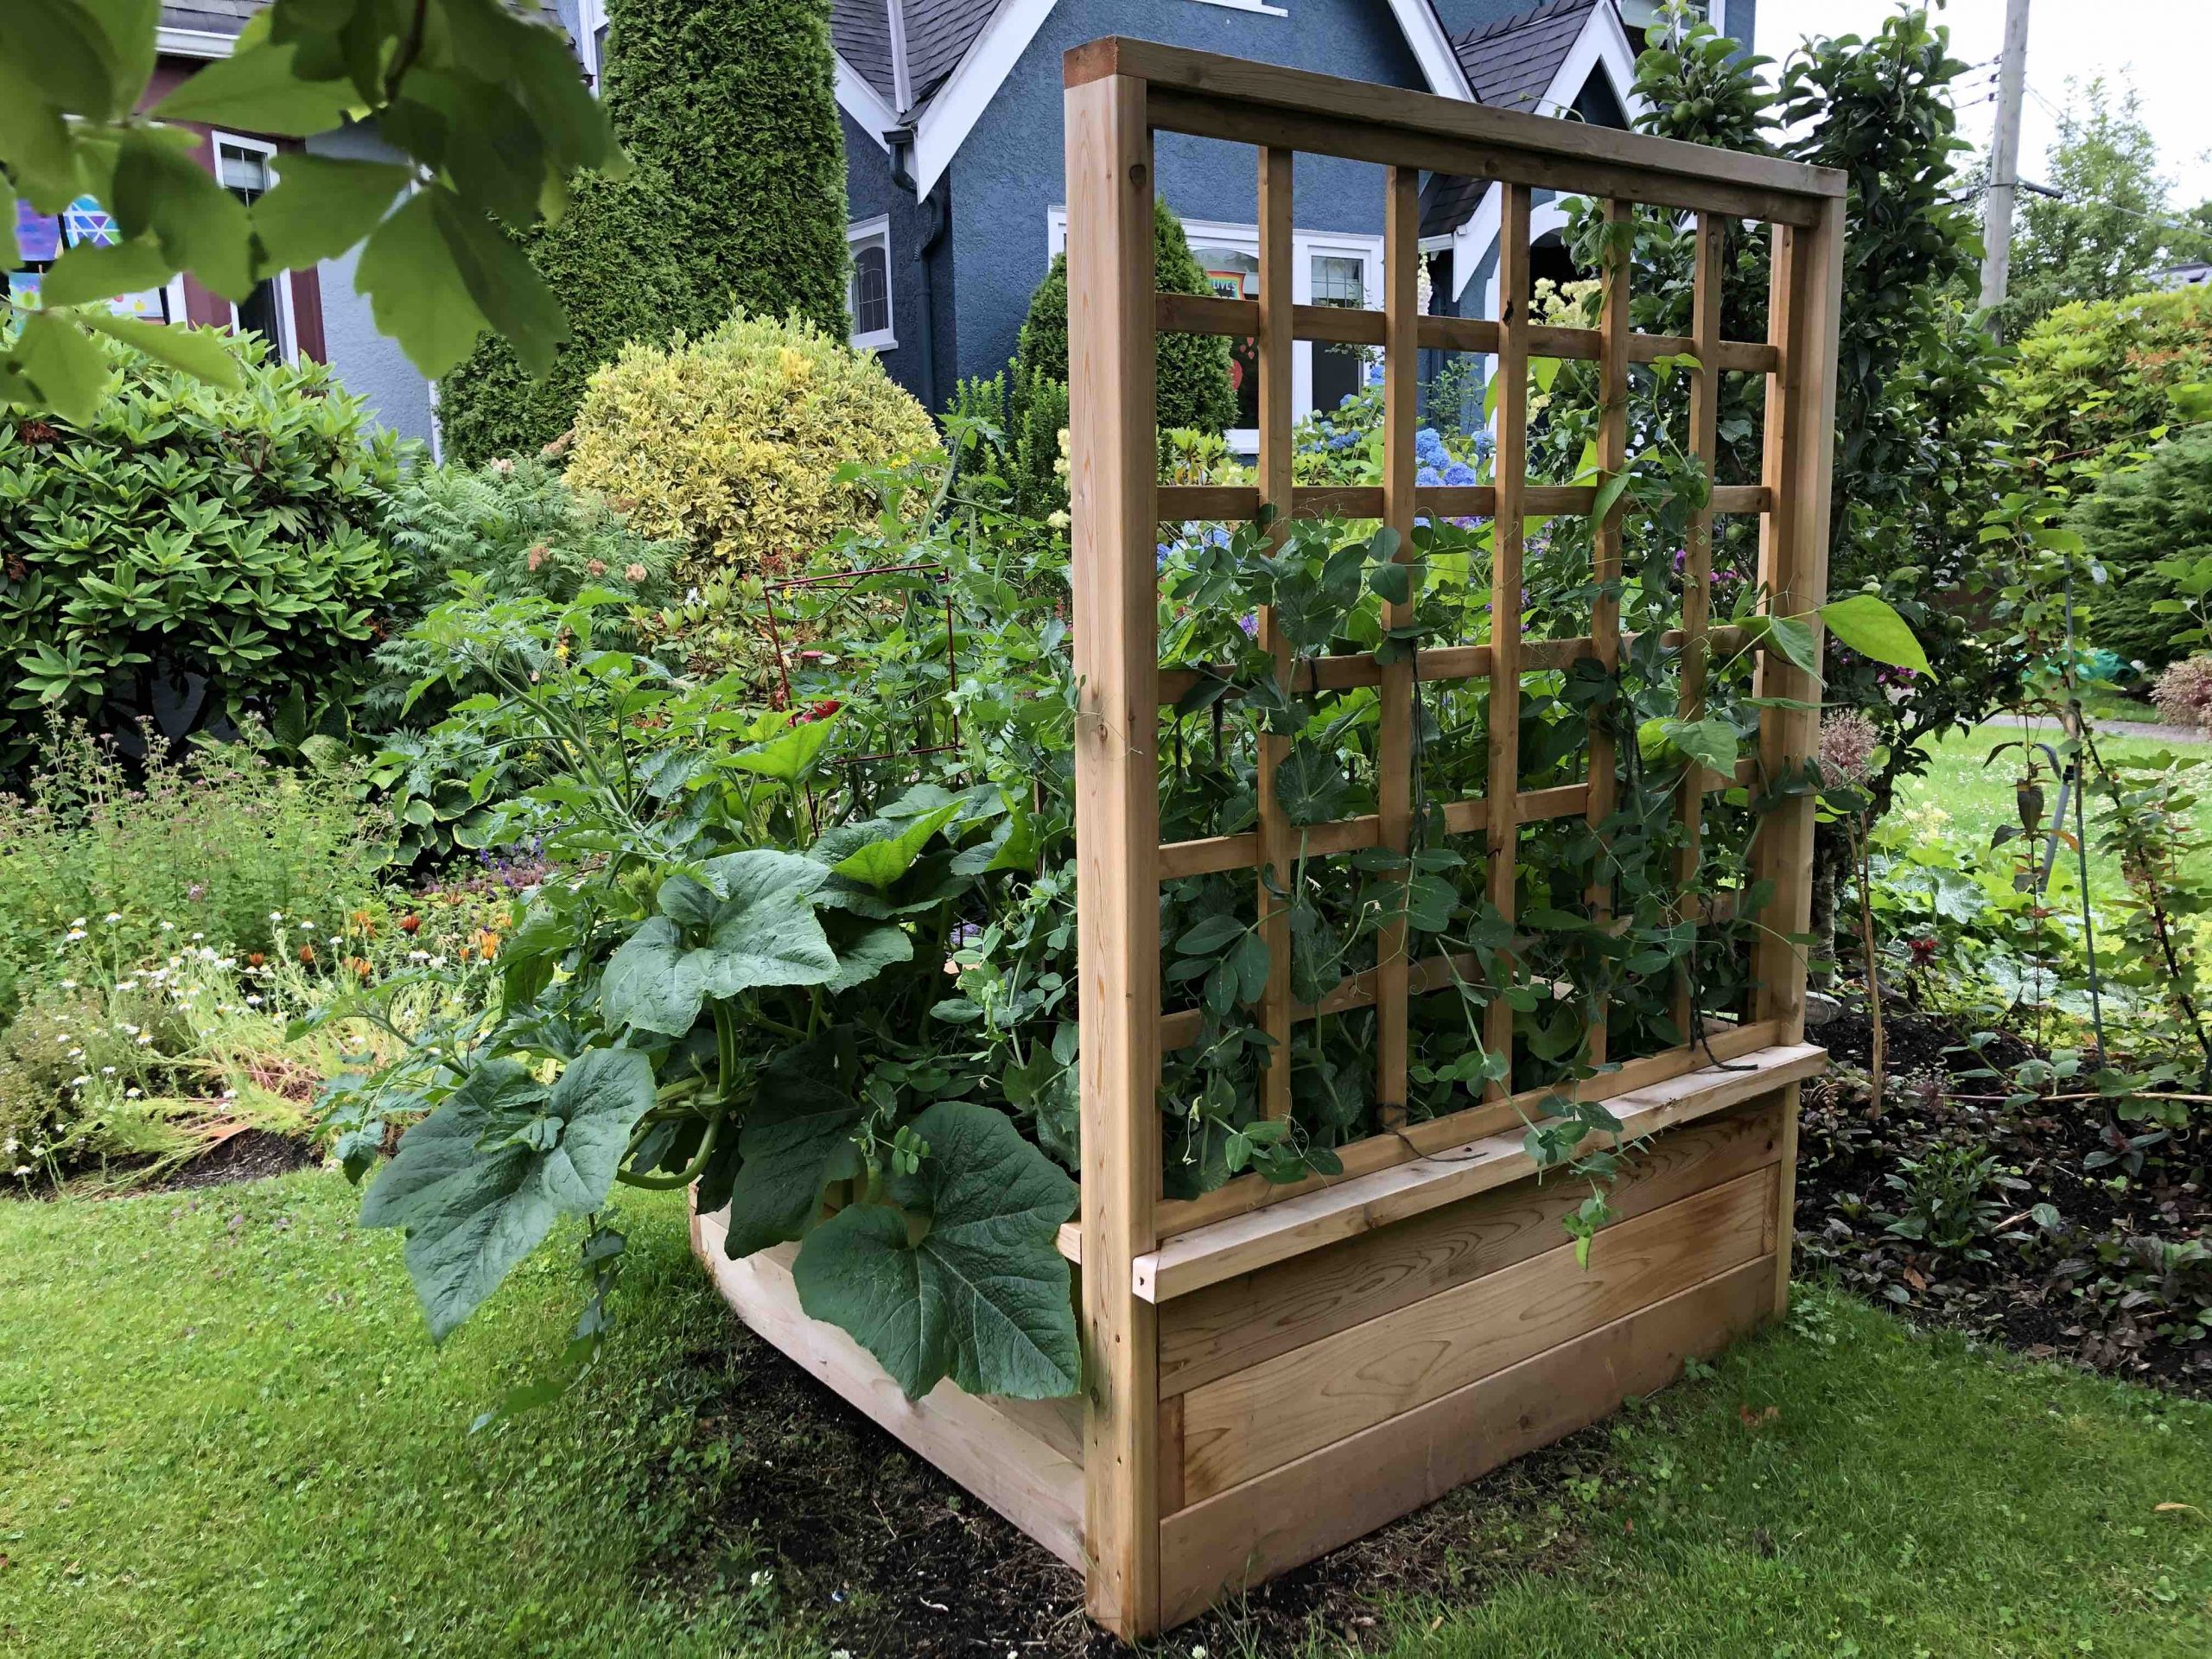 Raised cedar vegetable garden box with square trellis